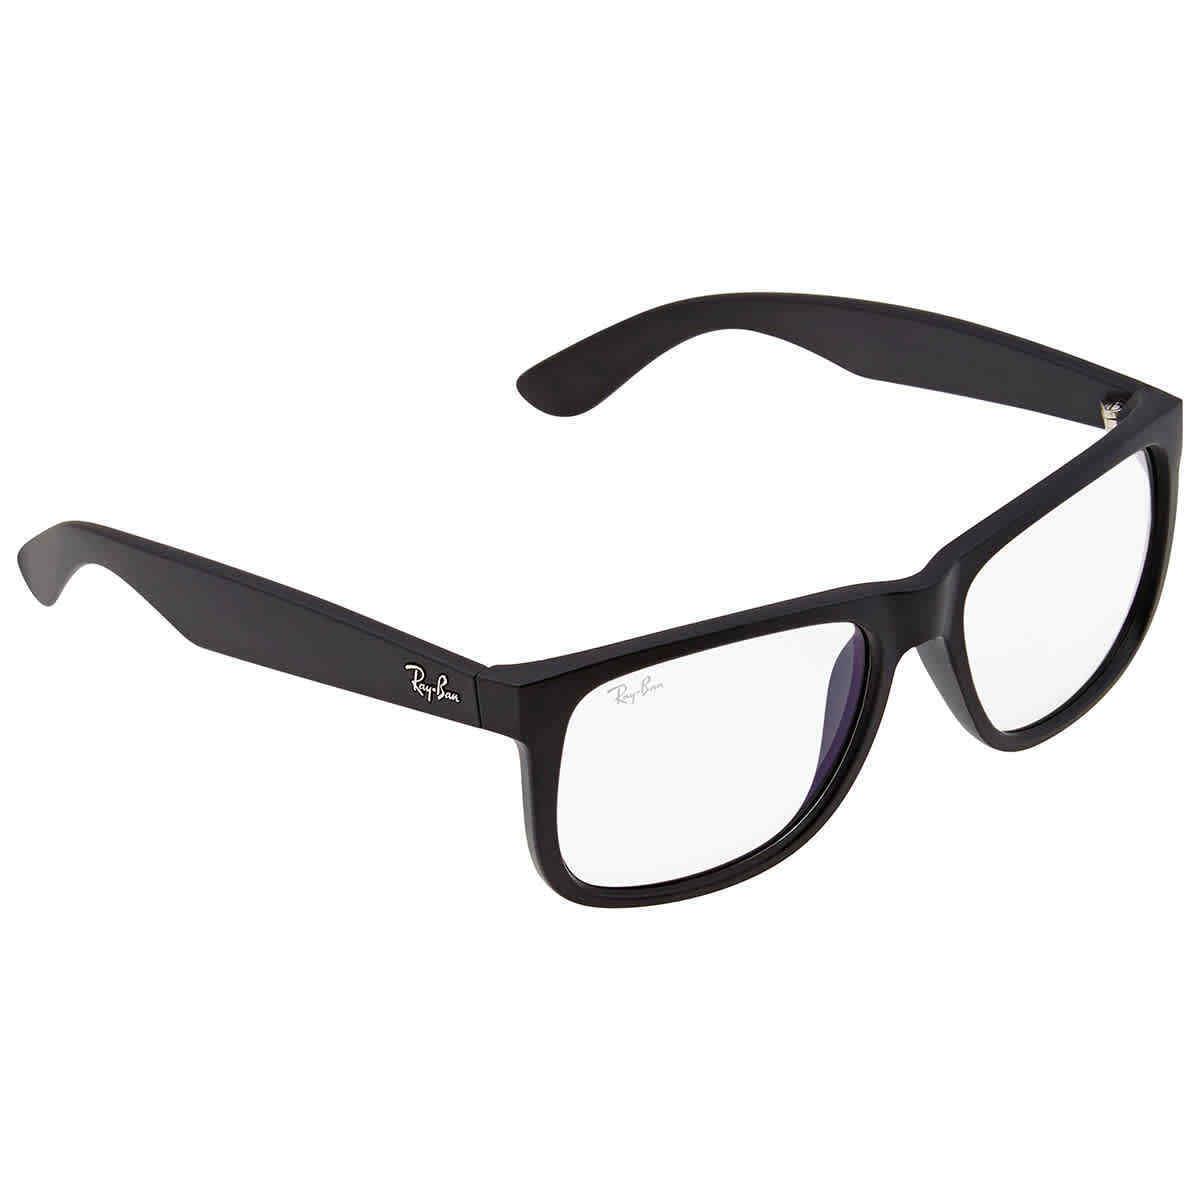 Ray Ban Justin Clear Square Men`s Sunglasses RB4165 622/5X 54 RB4165 622/5X 54 - Frame: Black, Lens: